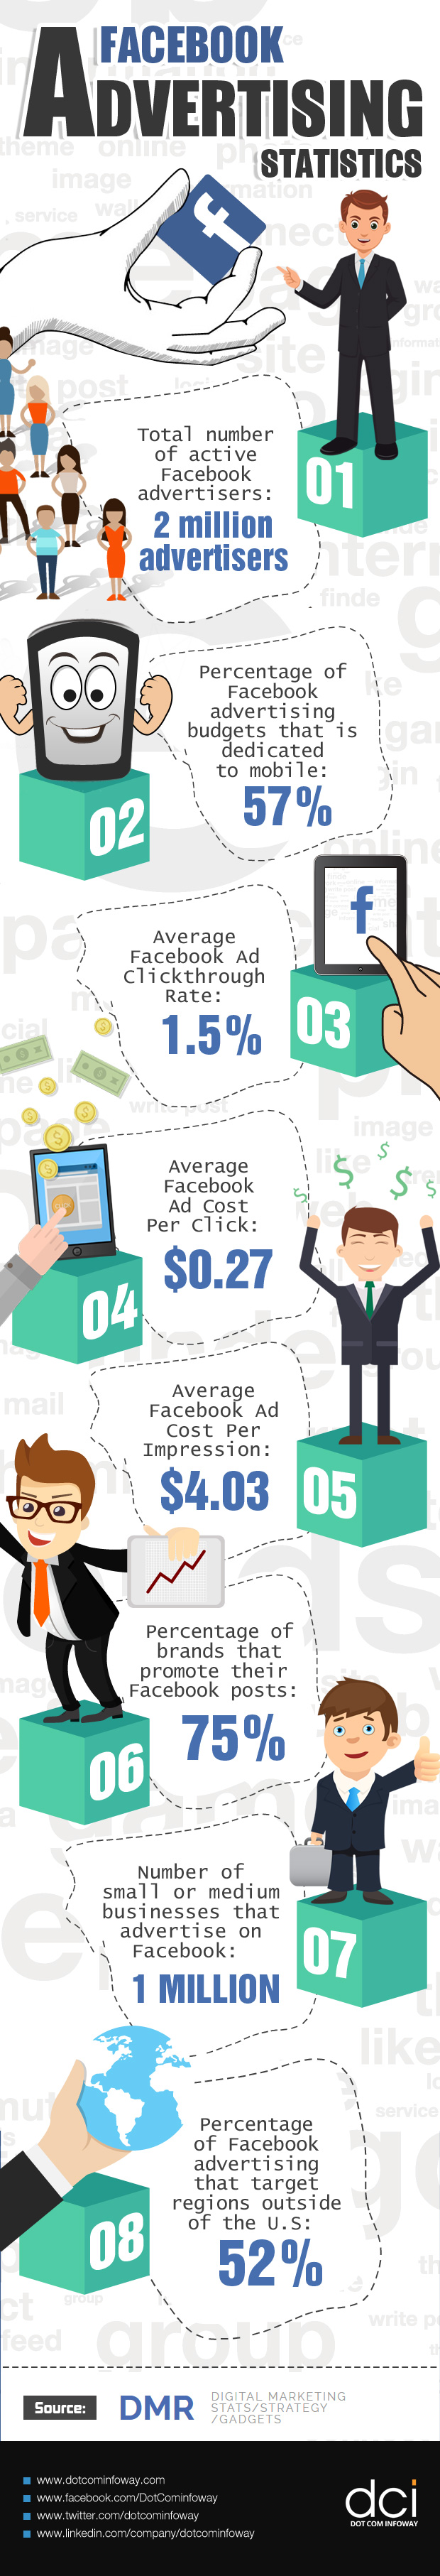 Facebook Advertising Statistics